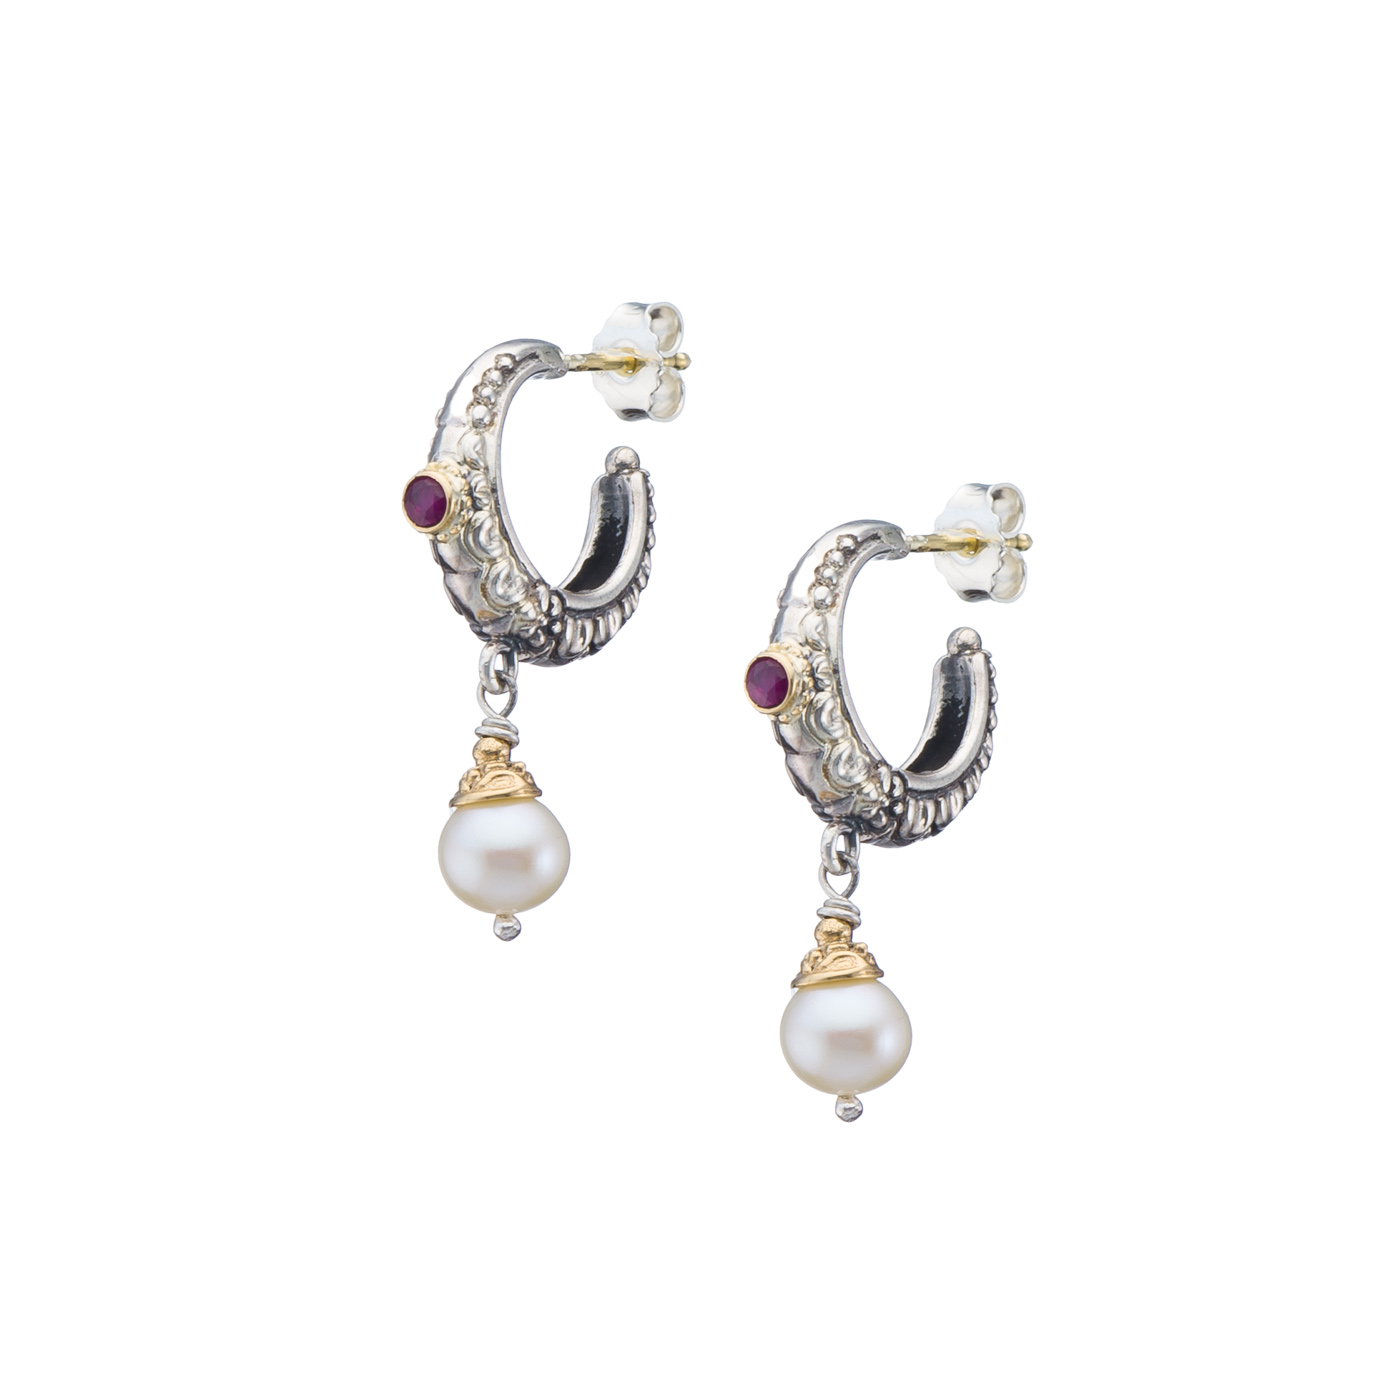 Santorini half hoop earrings in 18K Gold and Sterling Silver with ruby